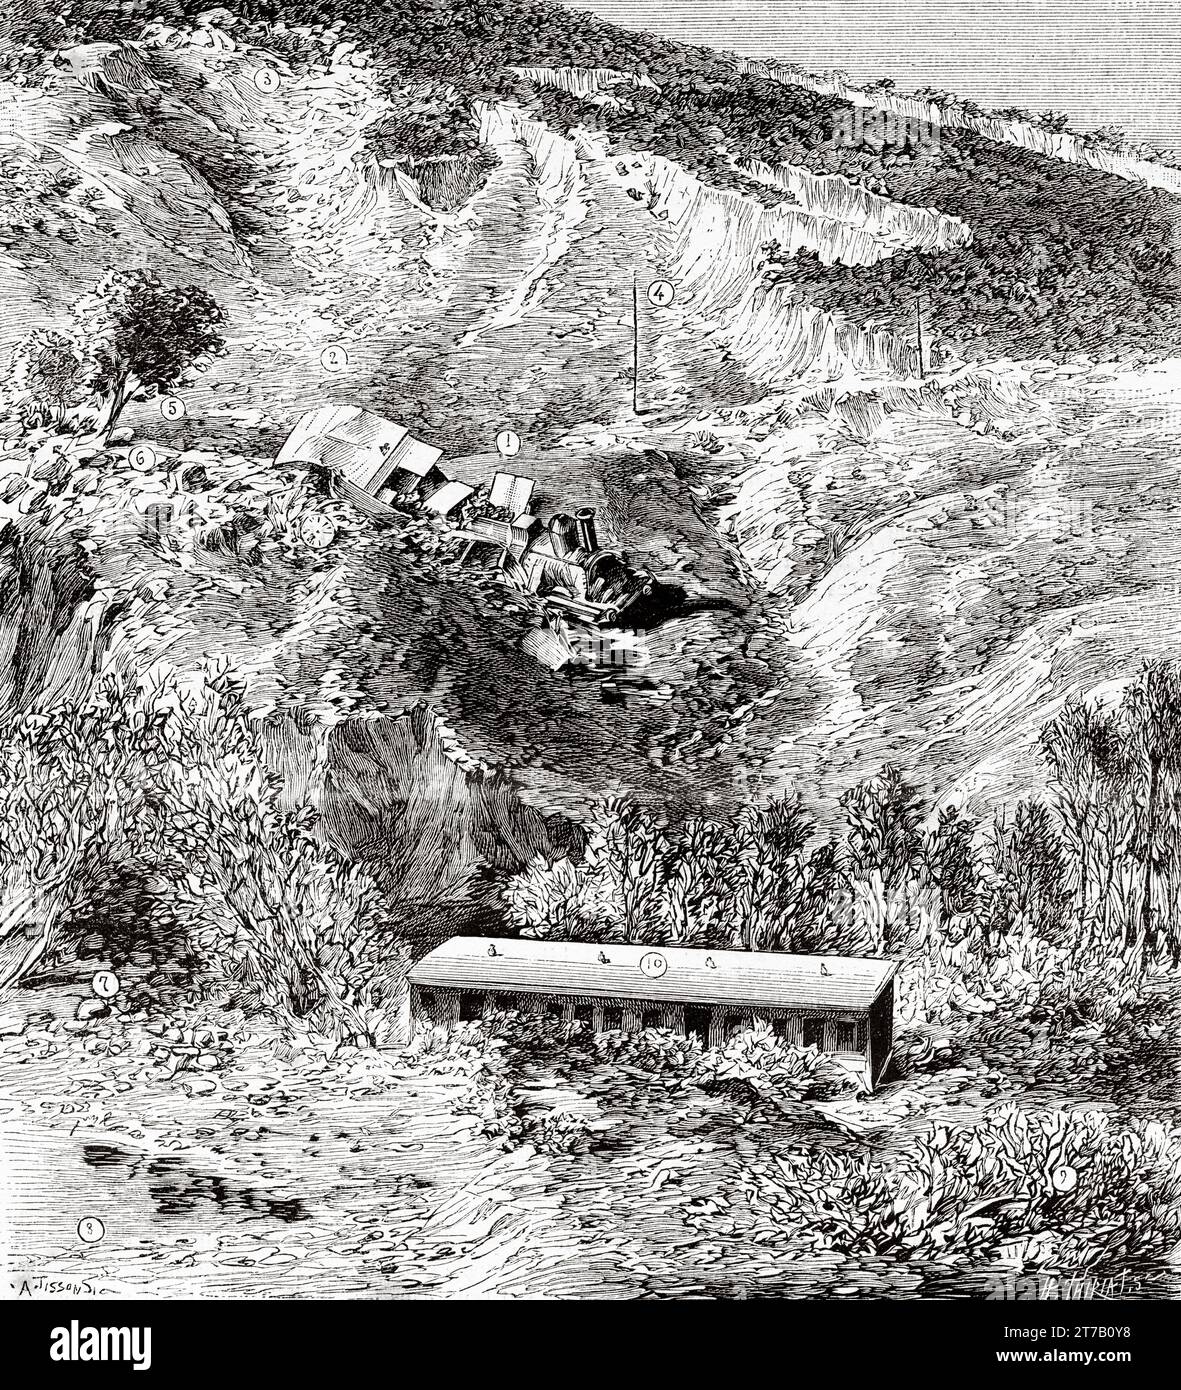 Railroad disaster, Sisteron disaster November 12, 1886, Faubourg de la Balme, France. Old illustration from La Nature 1887 Stock Photo